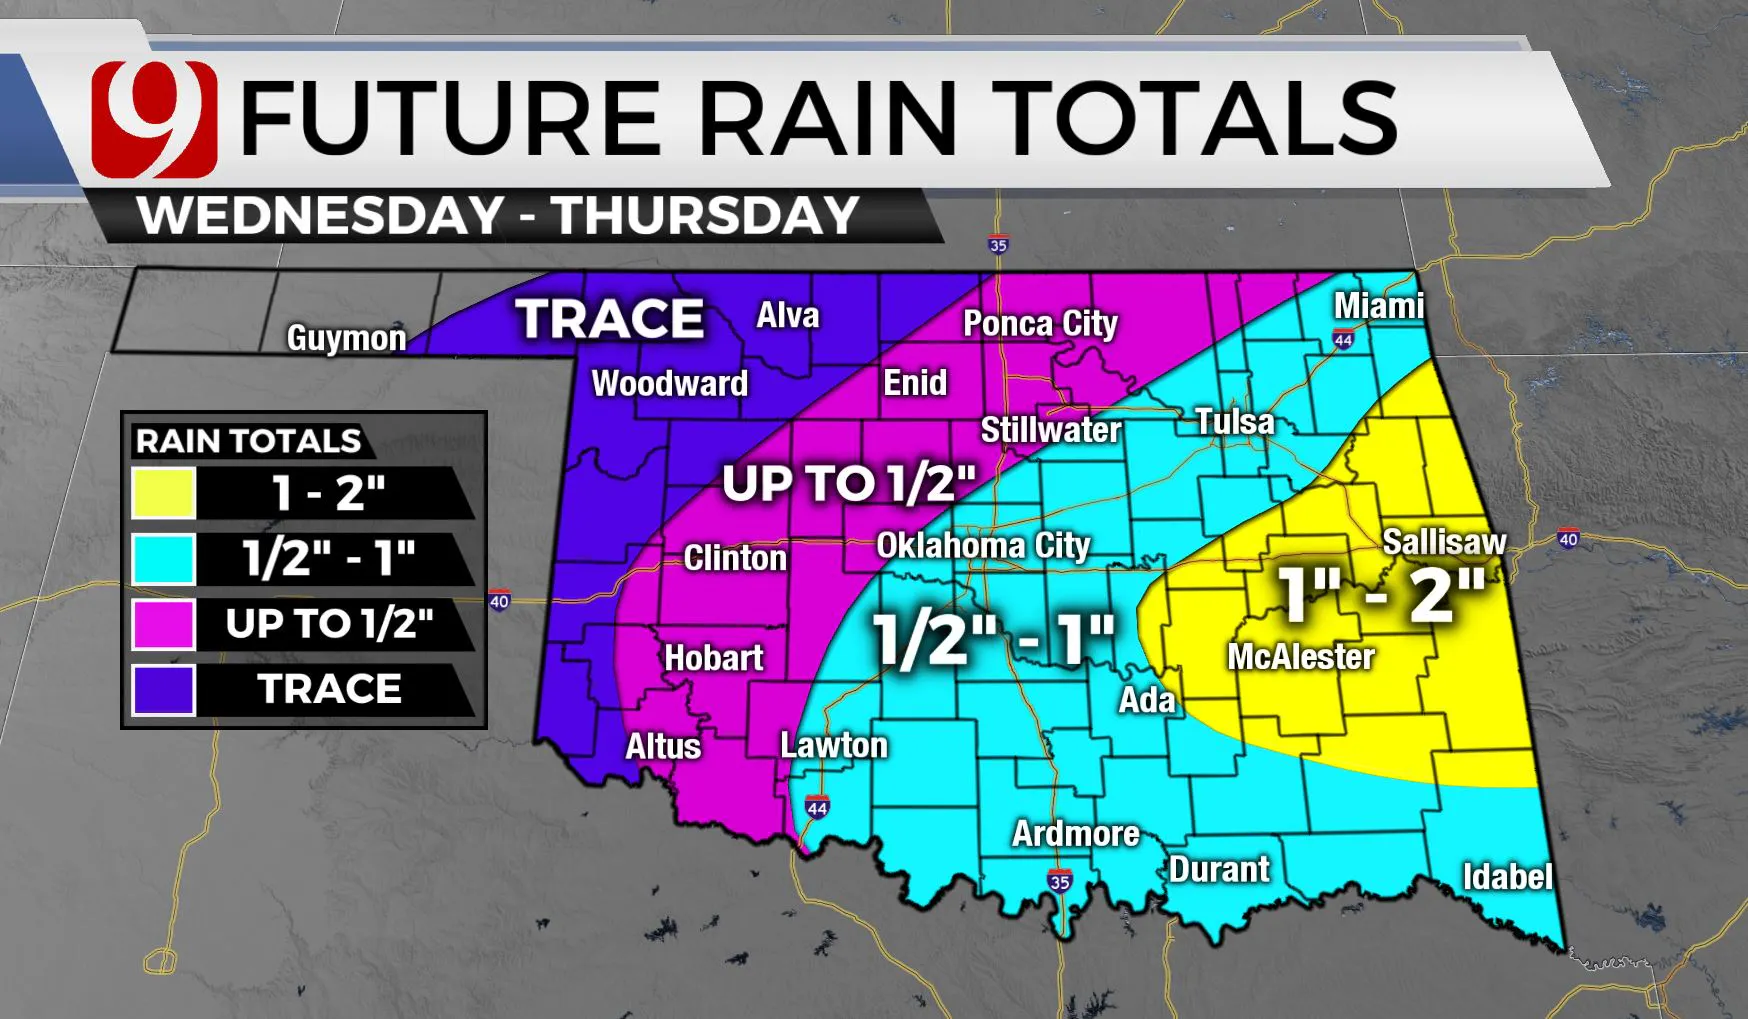 Future rain totals this week.